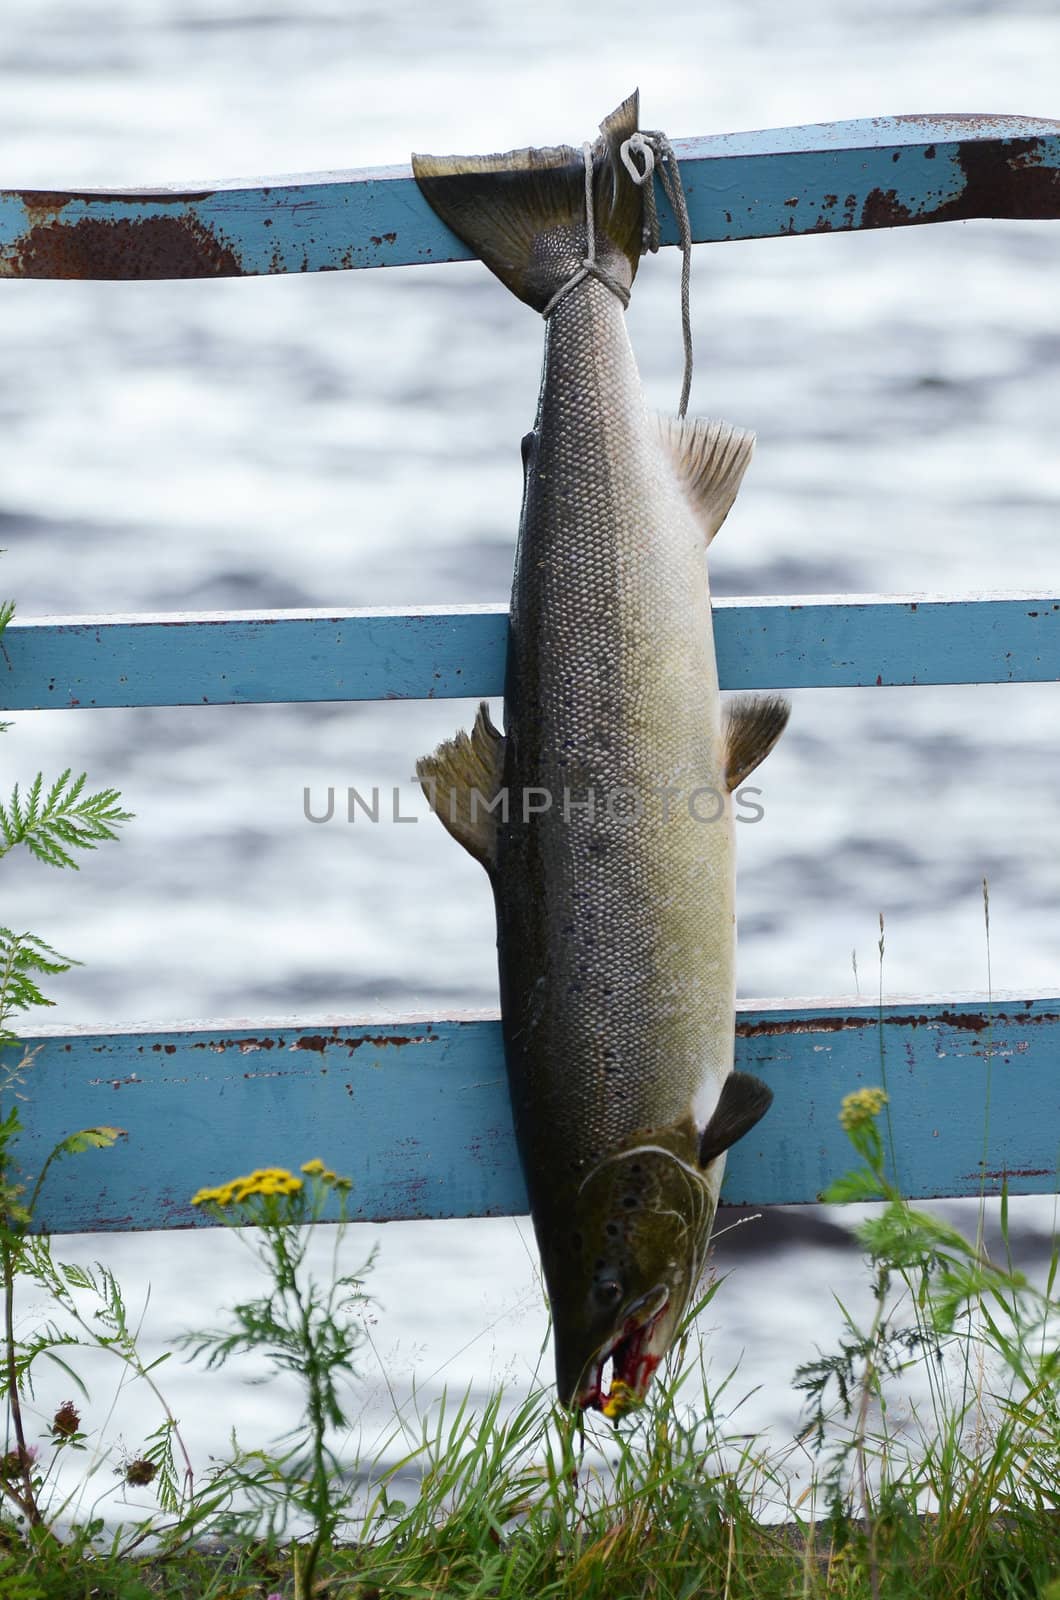 A large fresh caught salmon